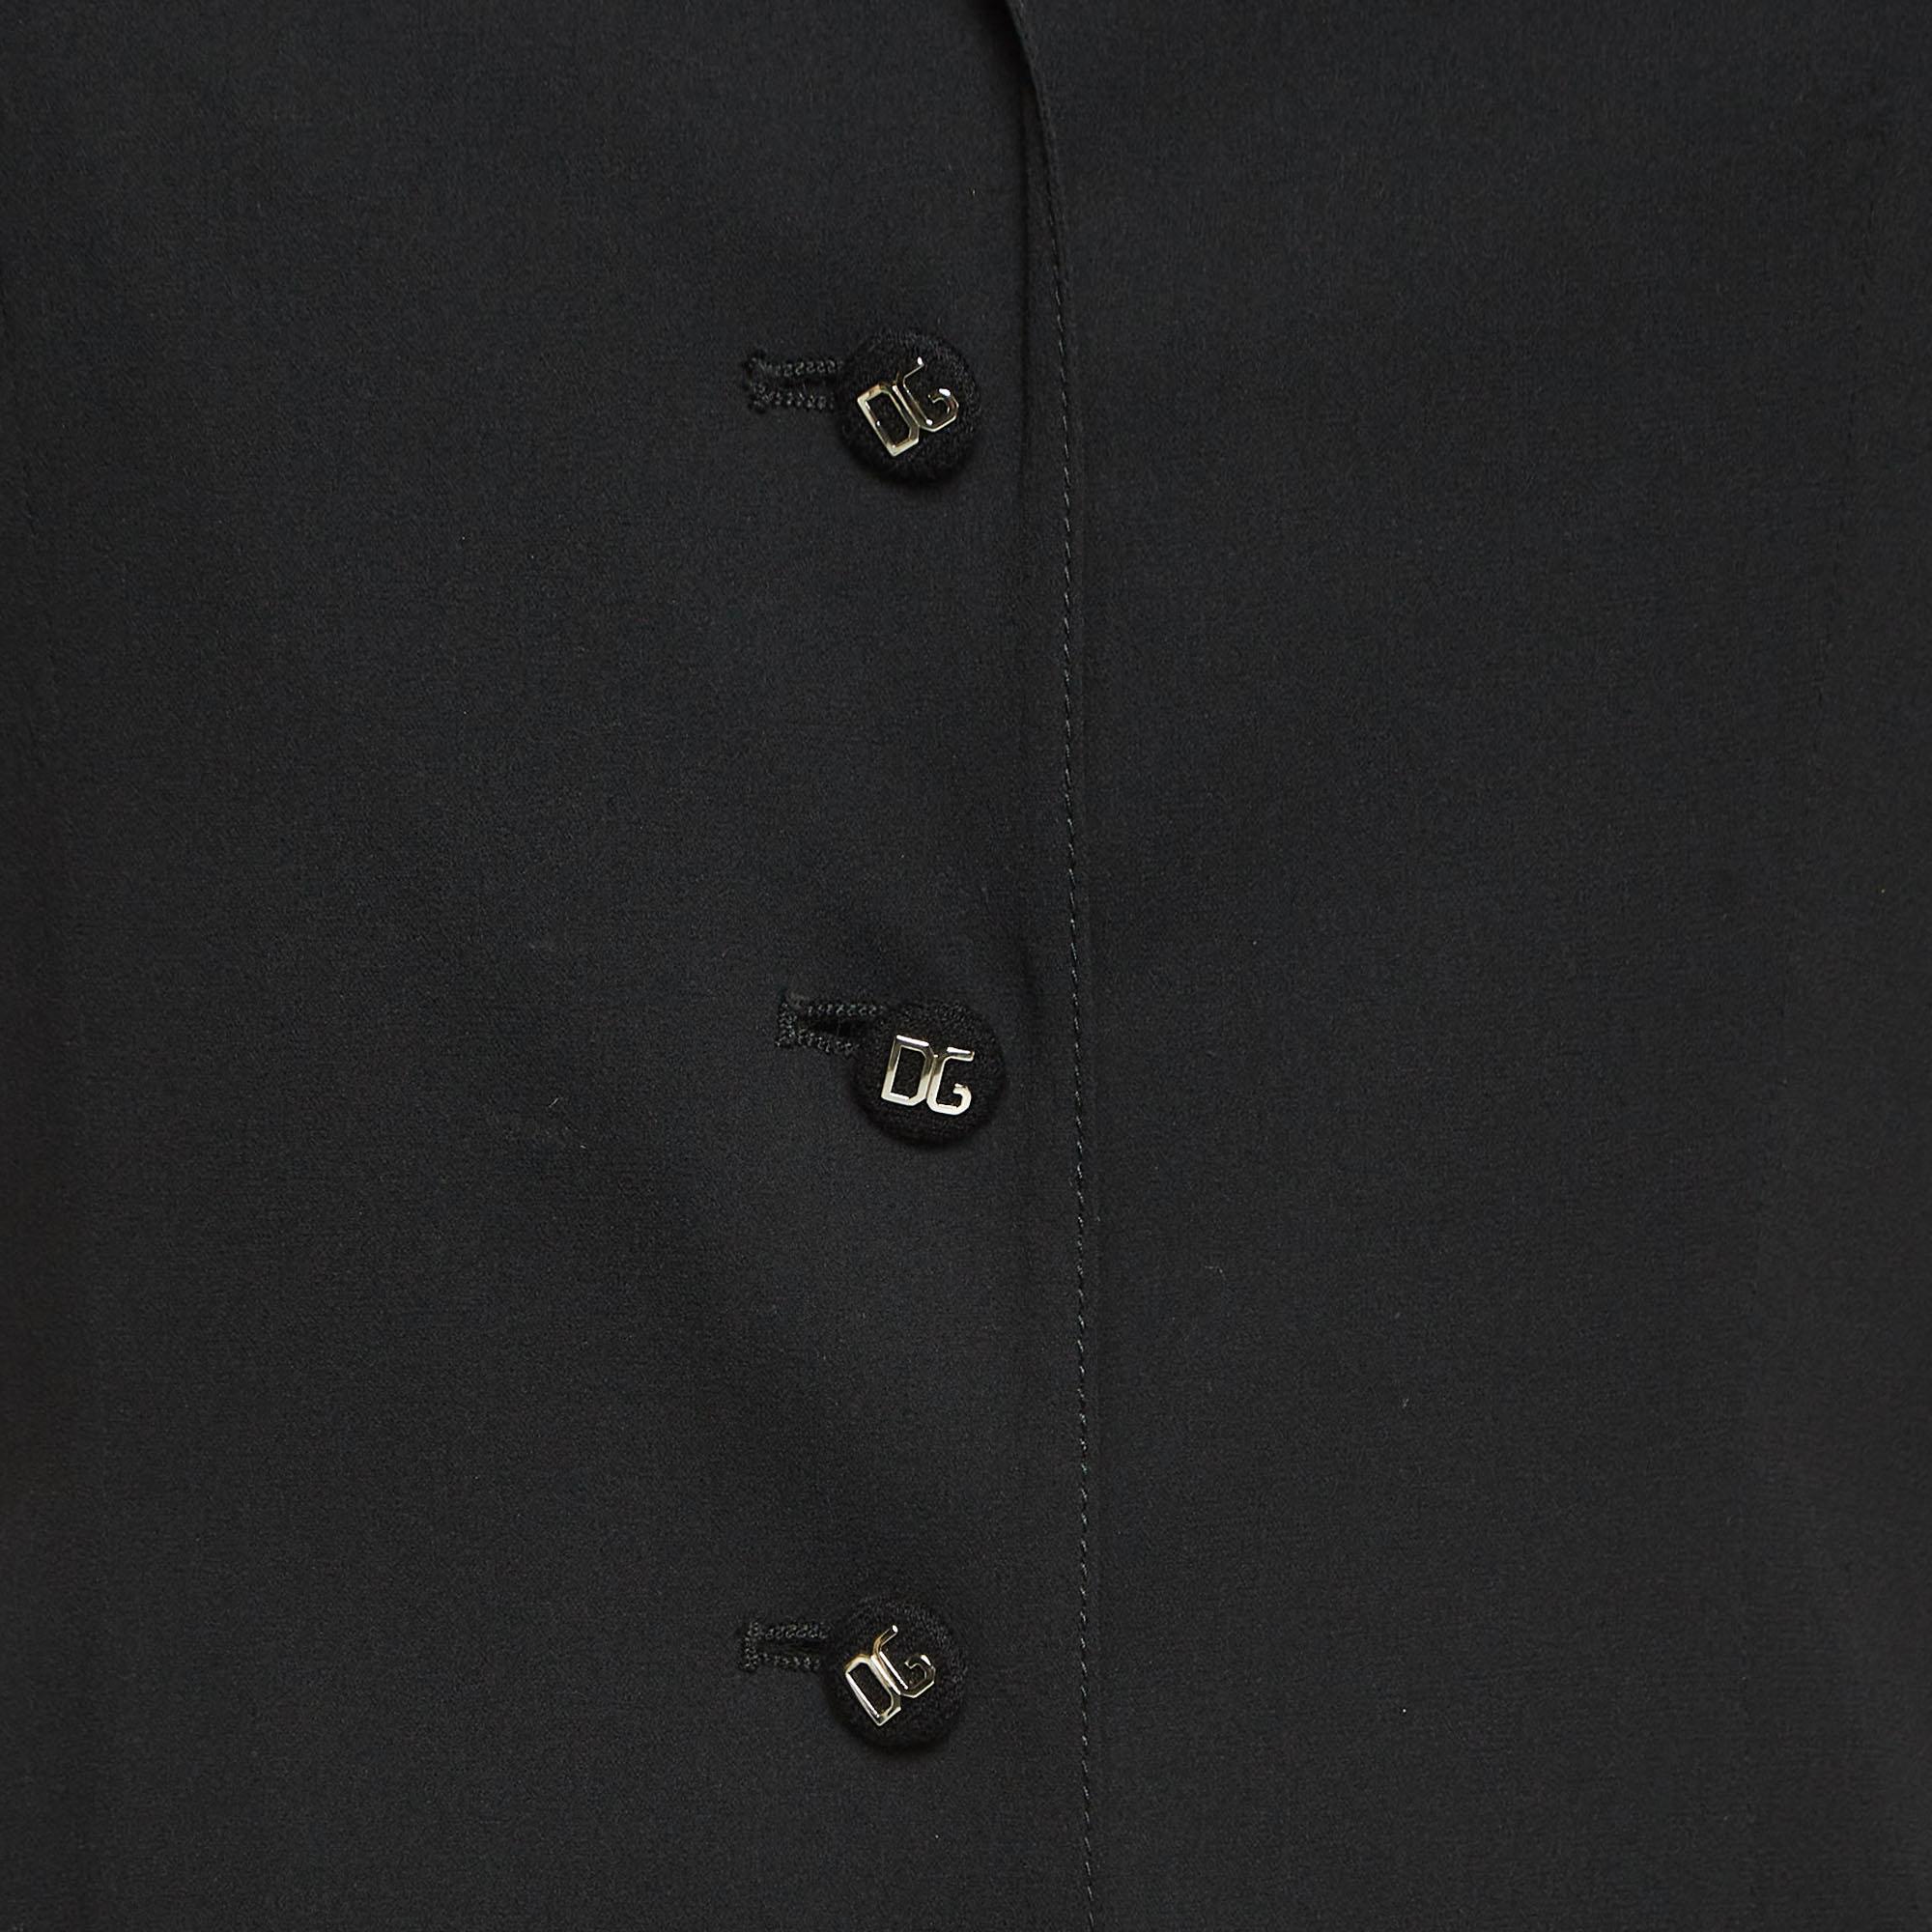 Dolce & Gabbana Black Silk Blend Formal Shirt and Skirt Set M In Good Condition For Sale In Dubai, Al Qouz 2